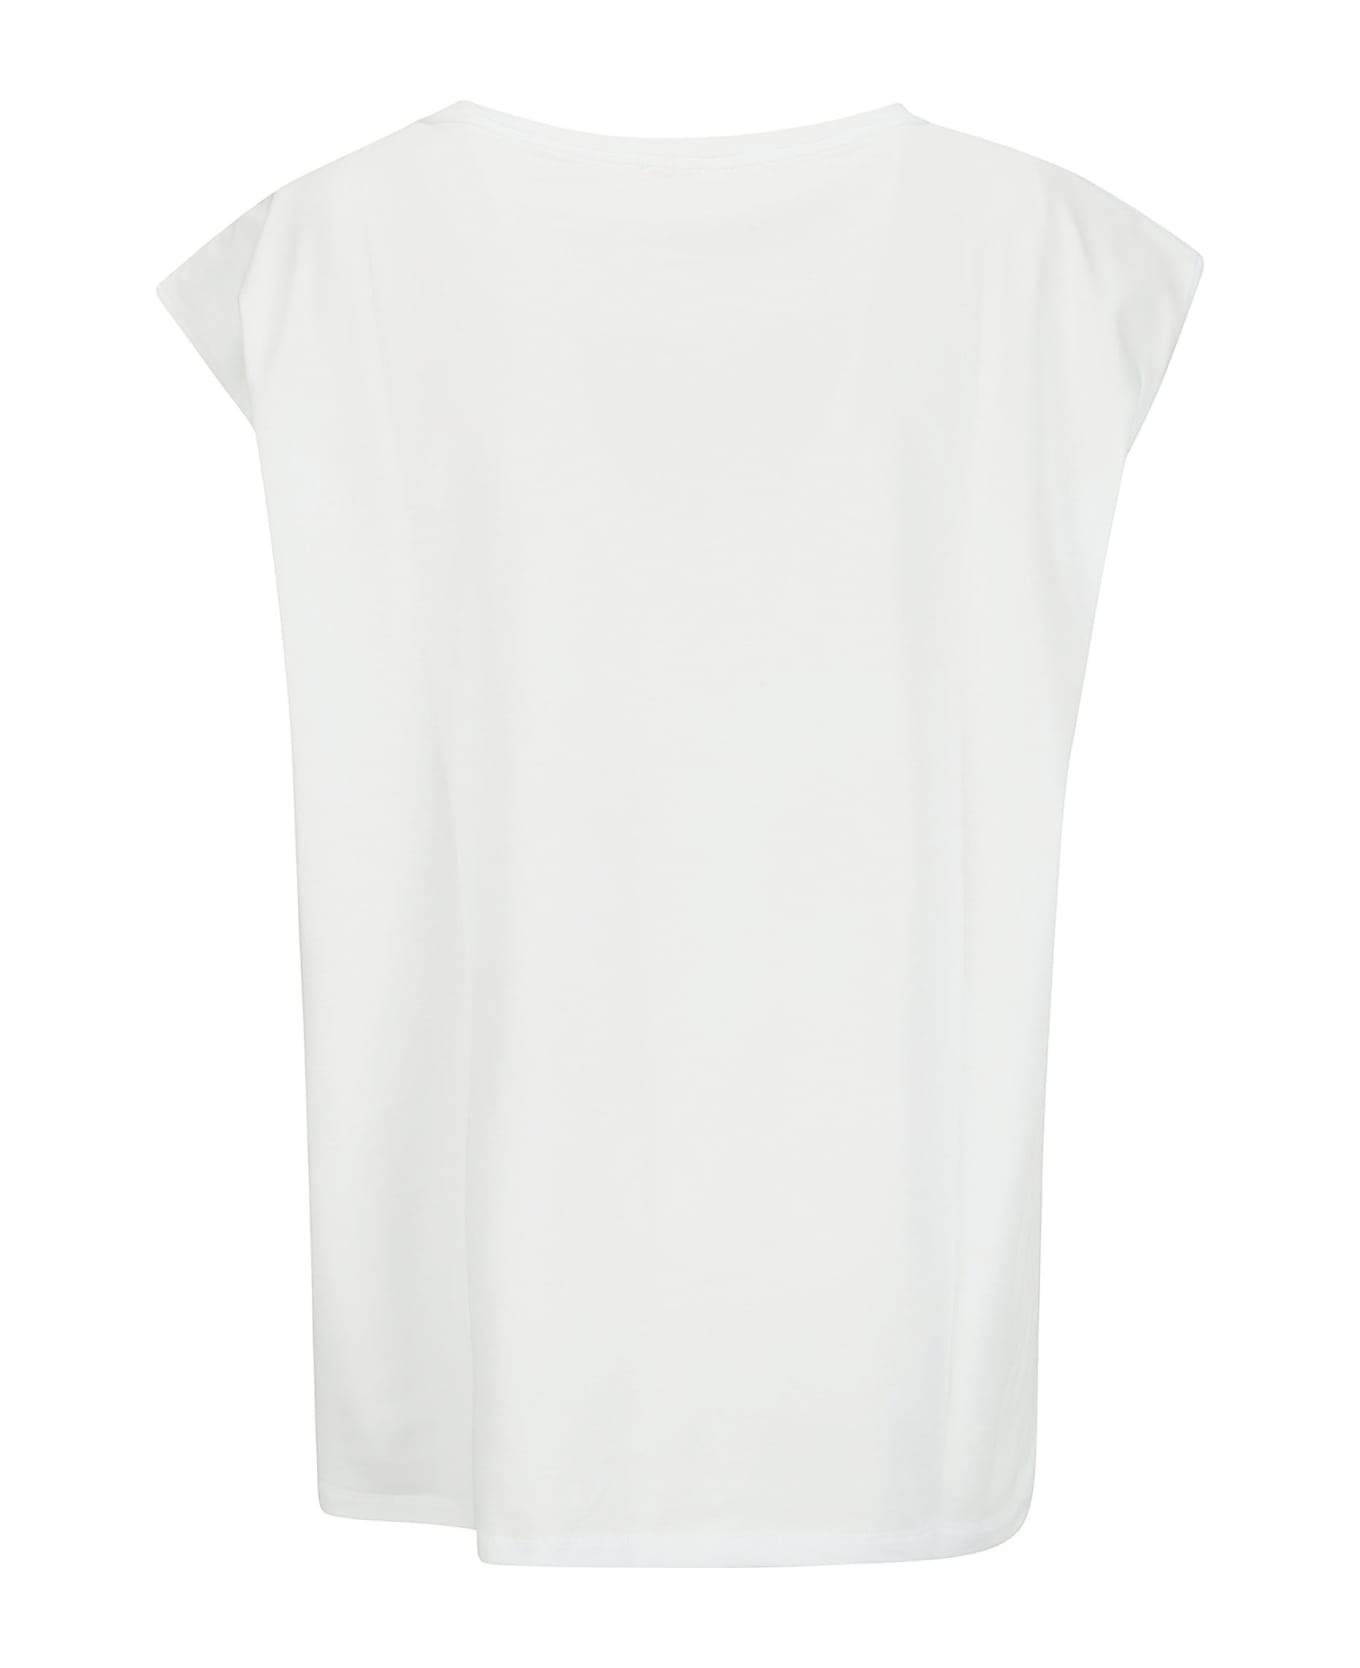 Hira Overall Cotton T-shirt - WHITE